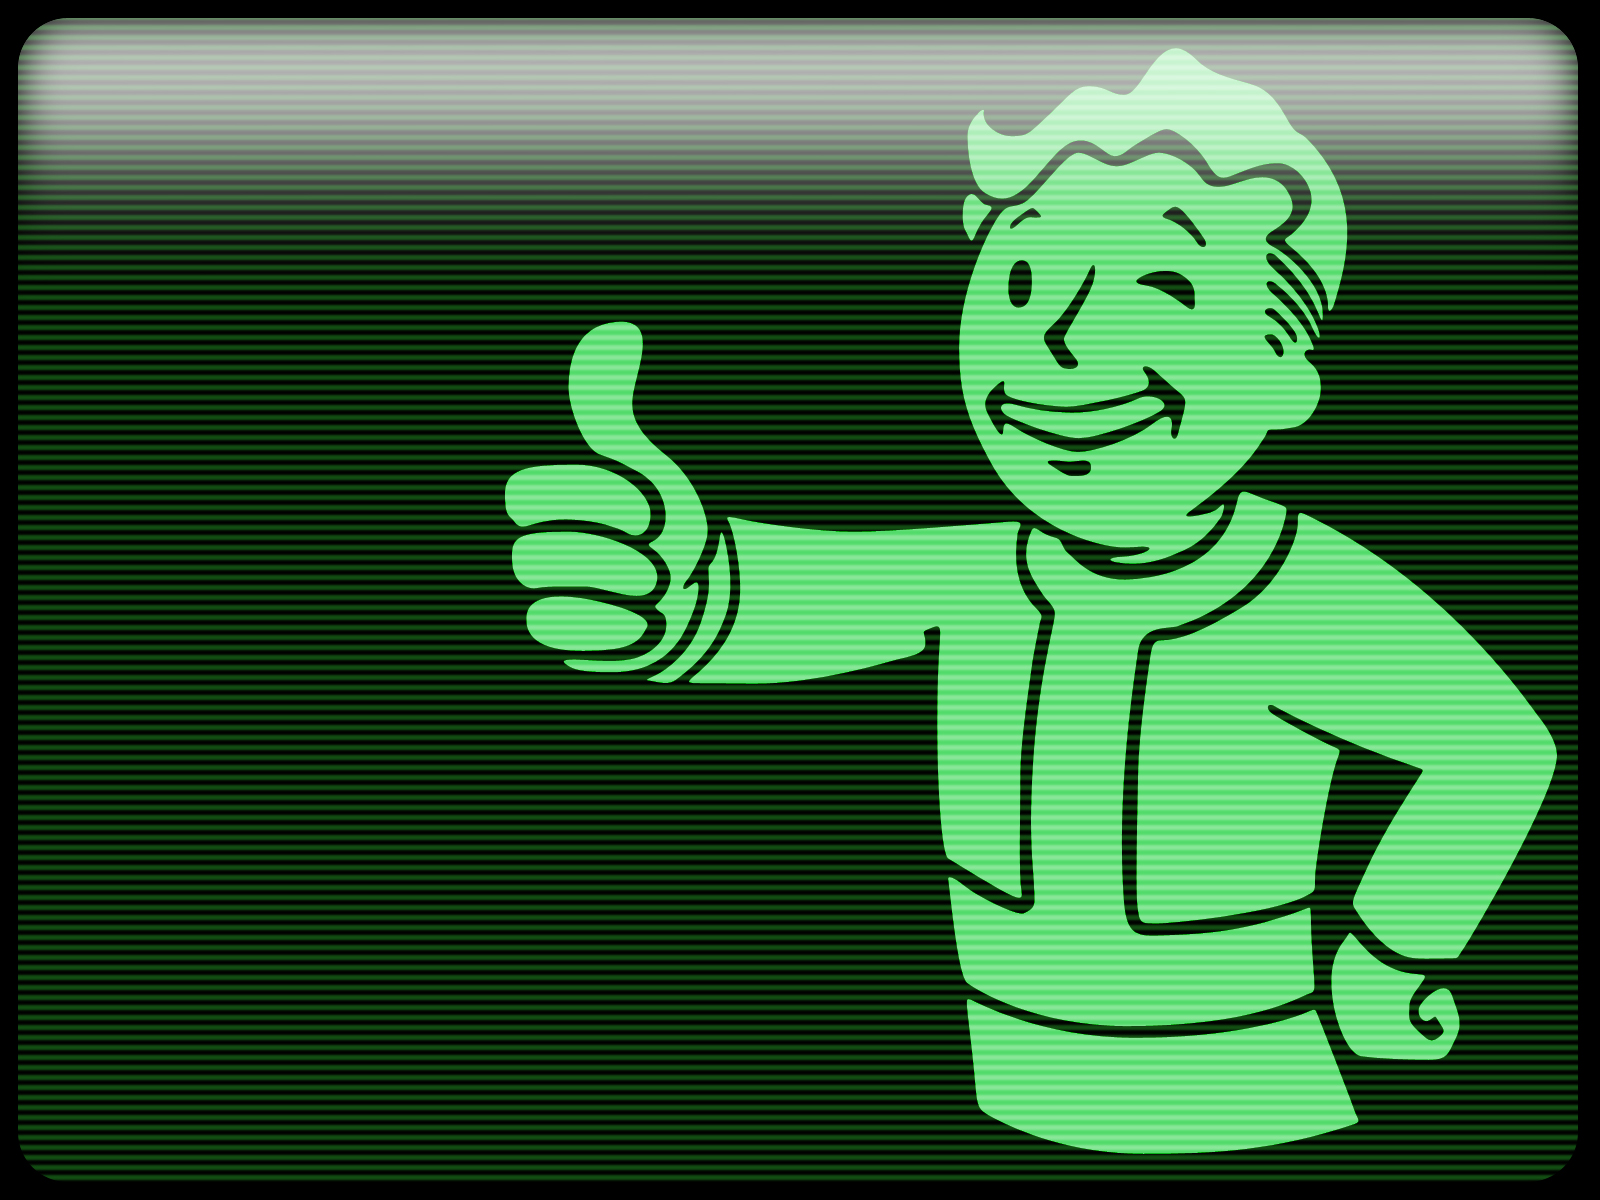 Fallout boy картинка